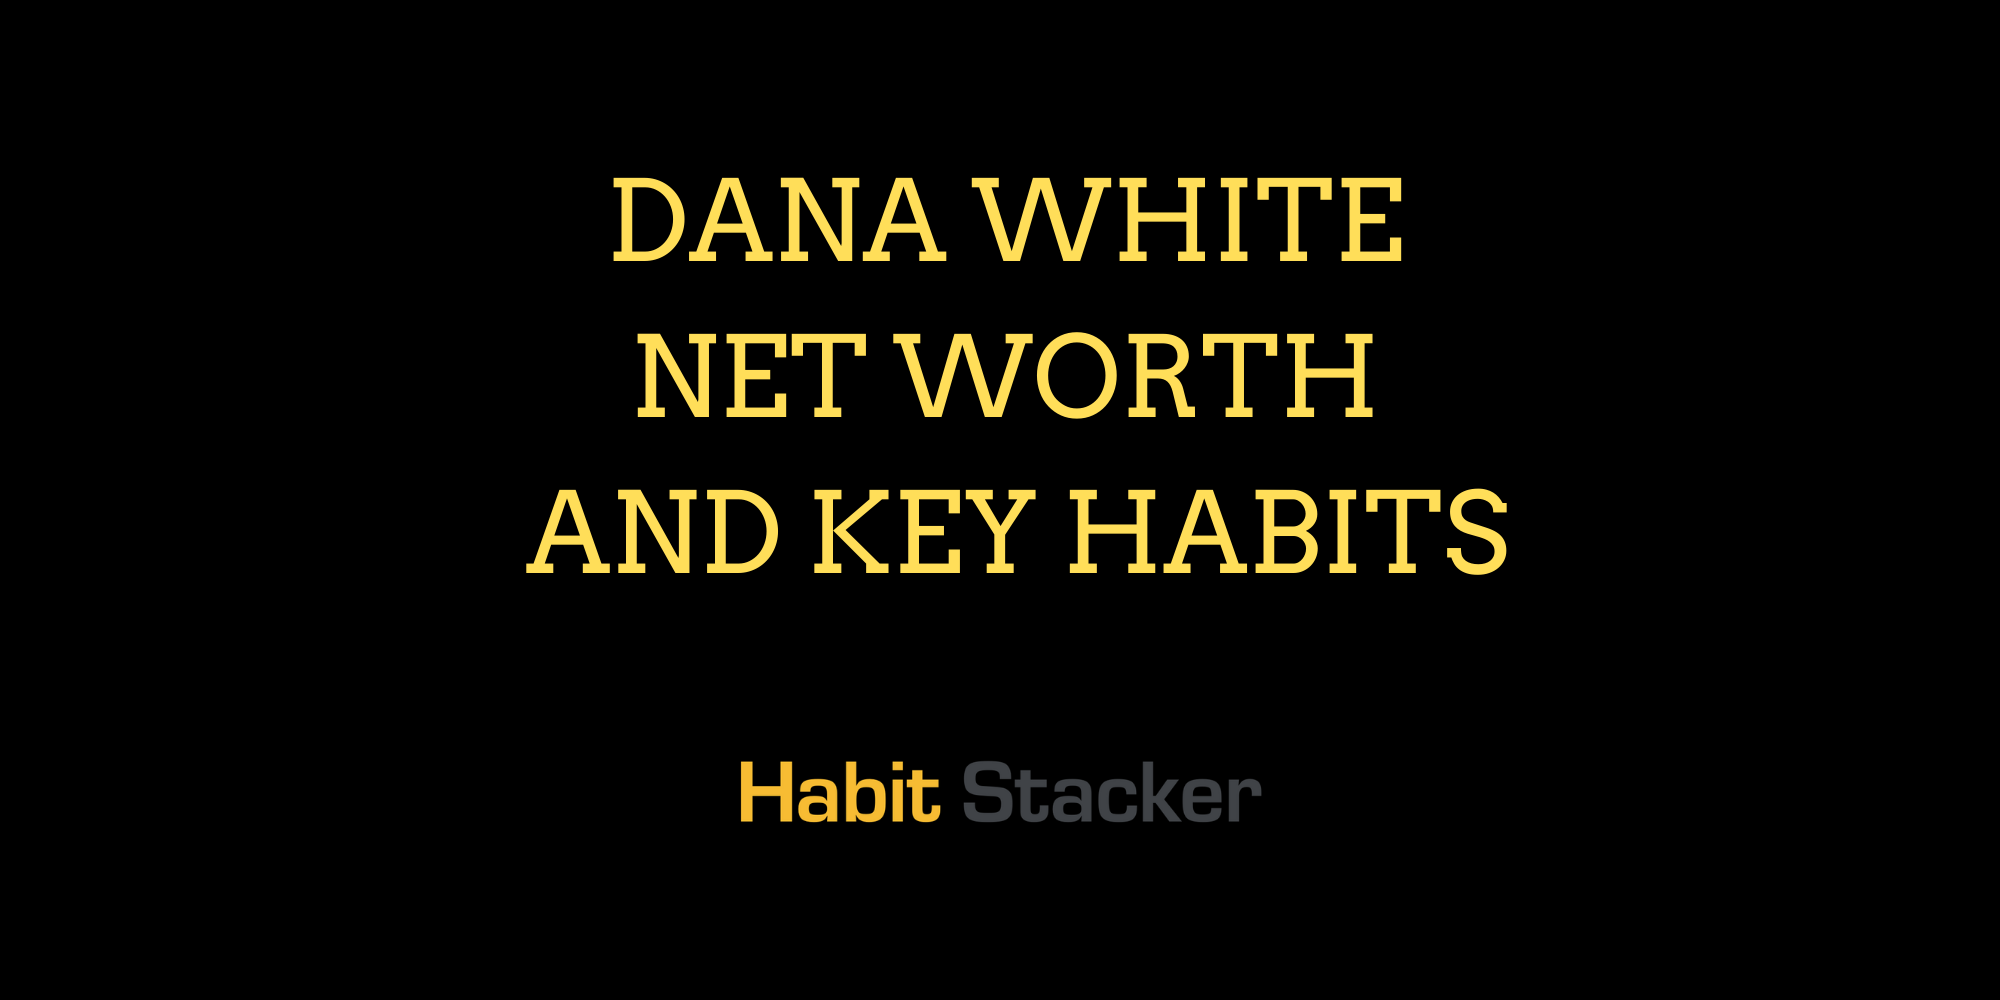 Dana White Net Worth and Key Habits